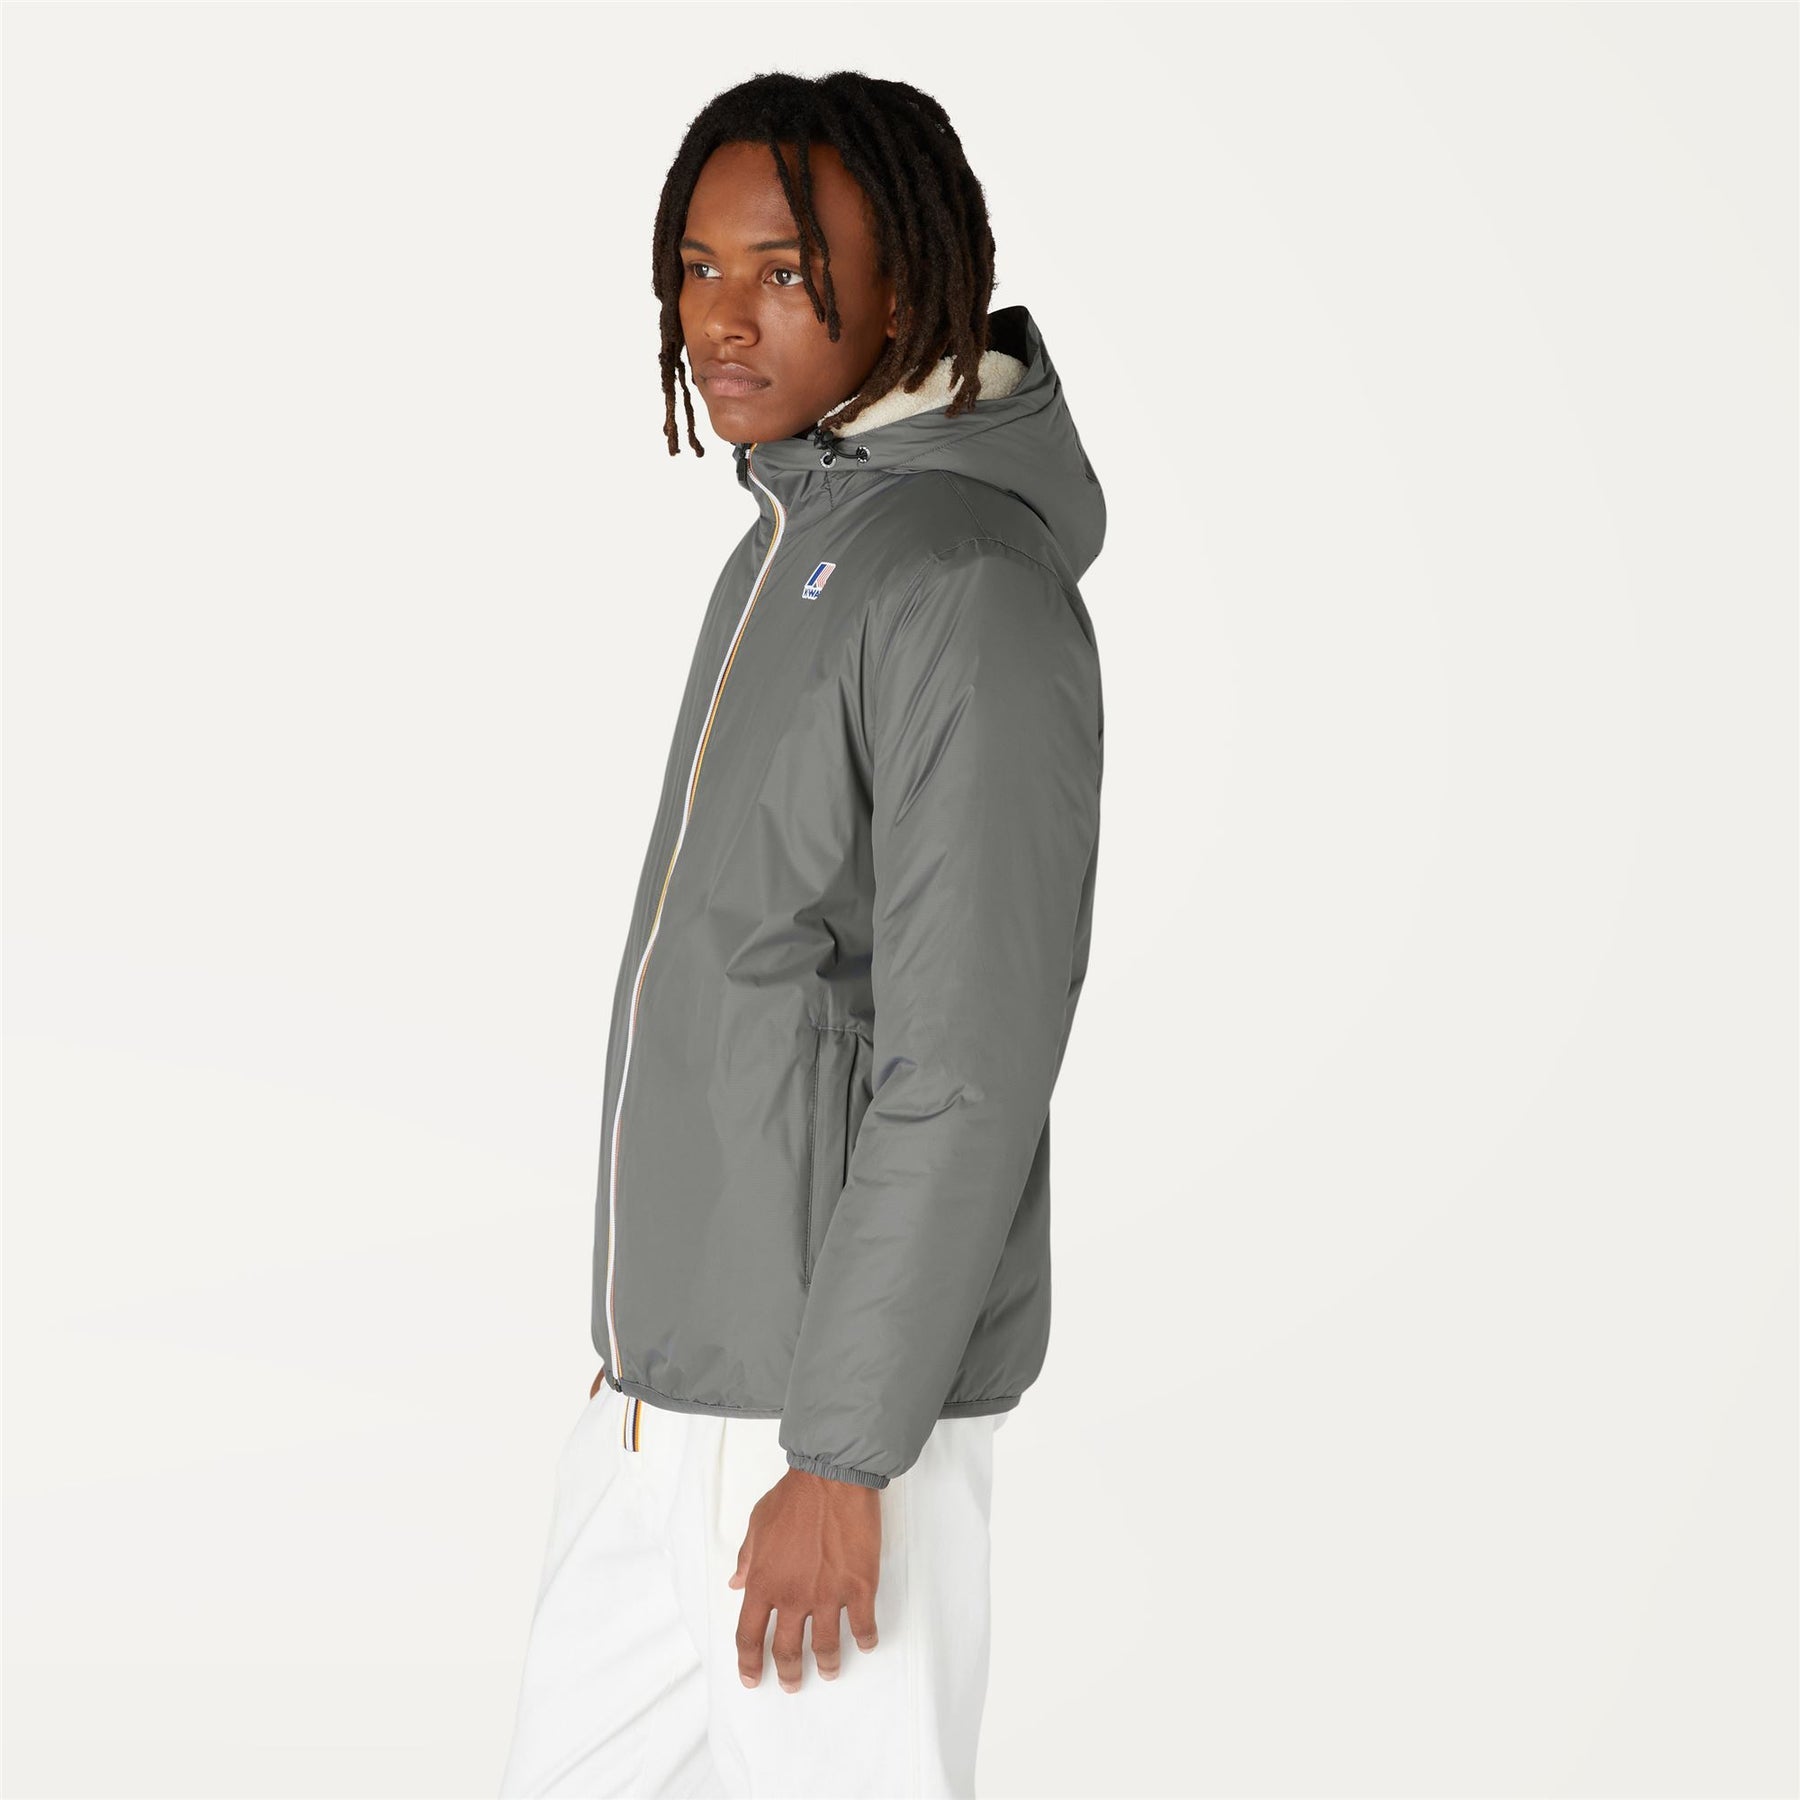 Claude Orsetto - Unisex Lined Full Zip Rain Jacket in Grey Smoked